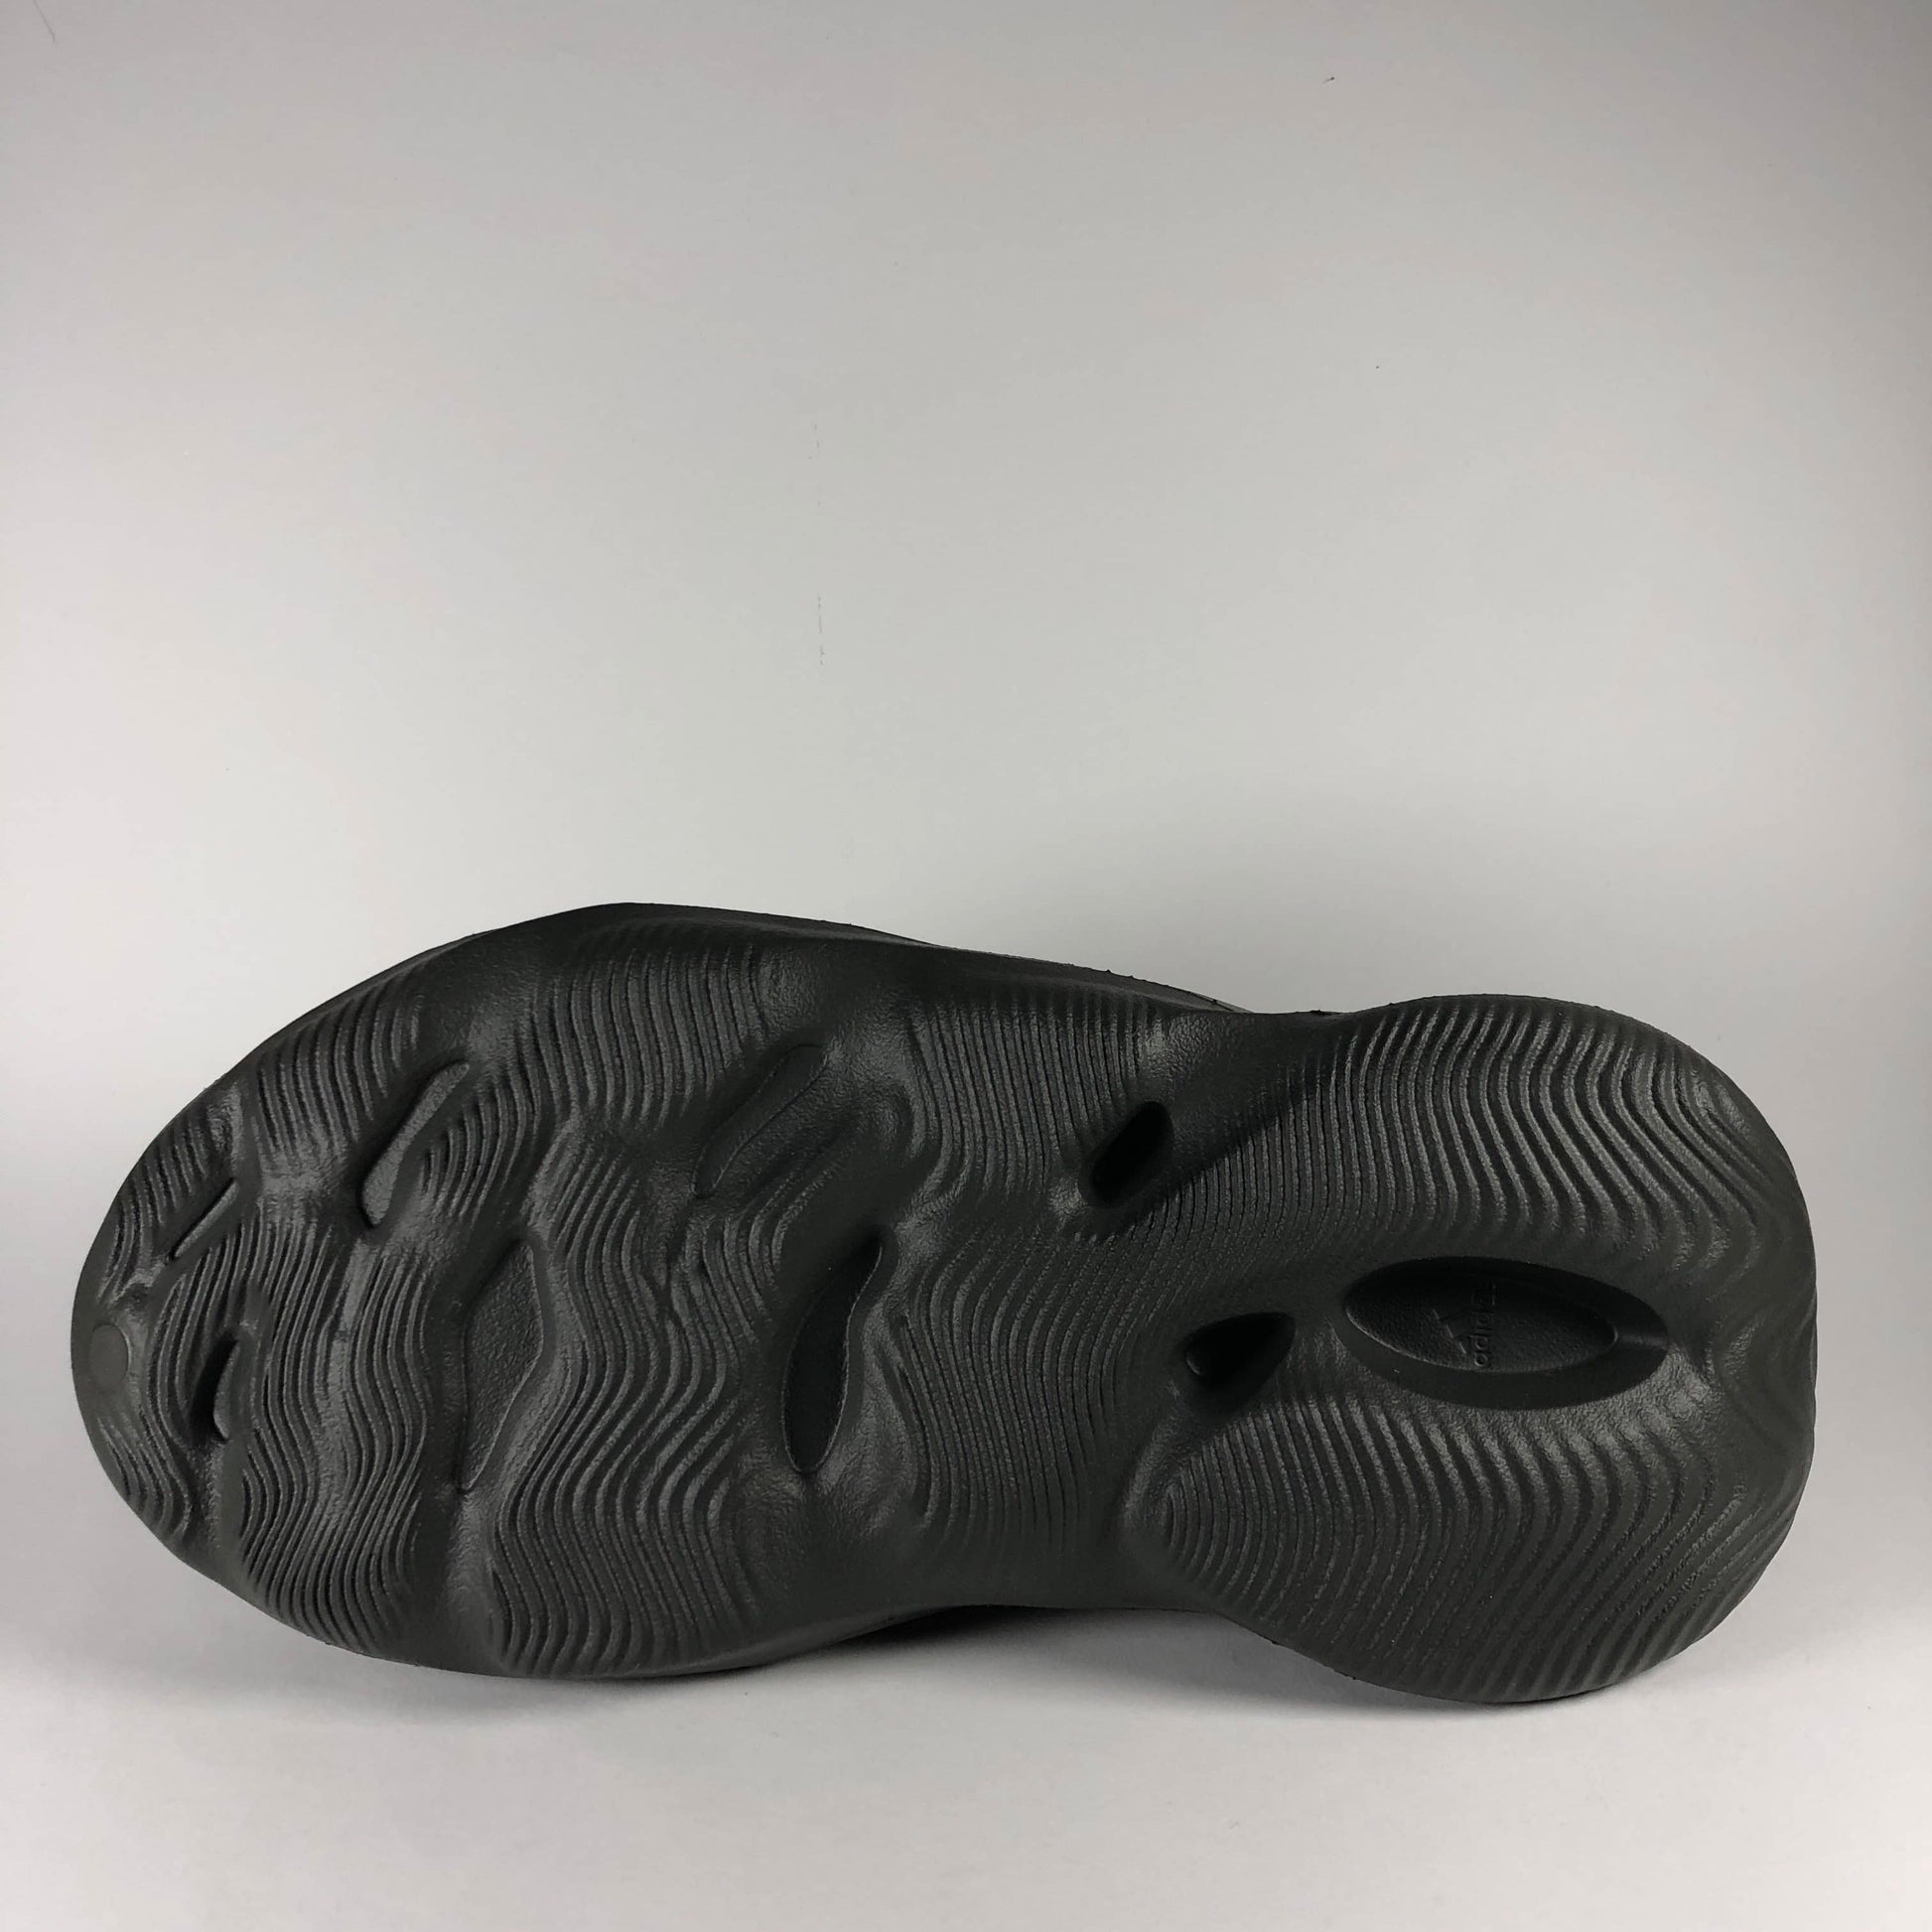 Adidas Yeezy Foam Runner Carbon Sohle